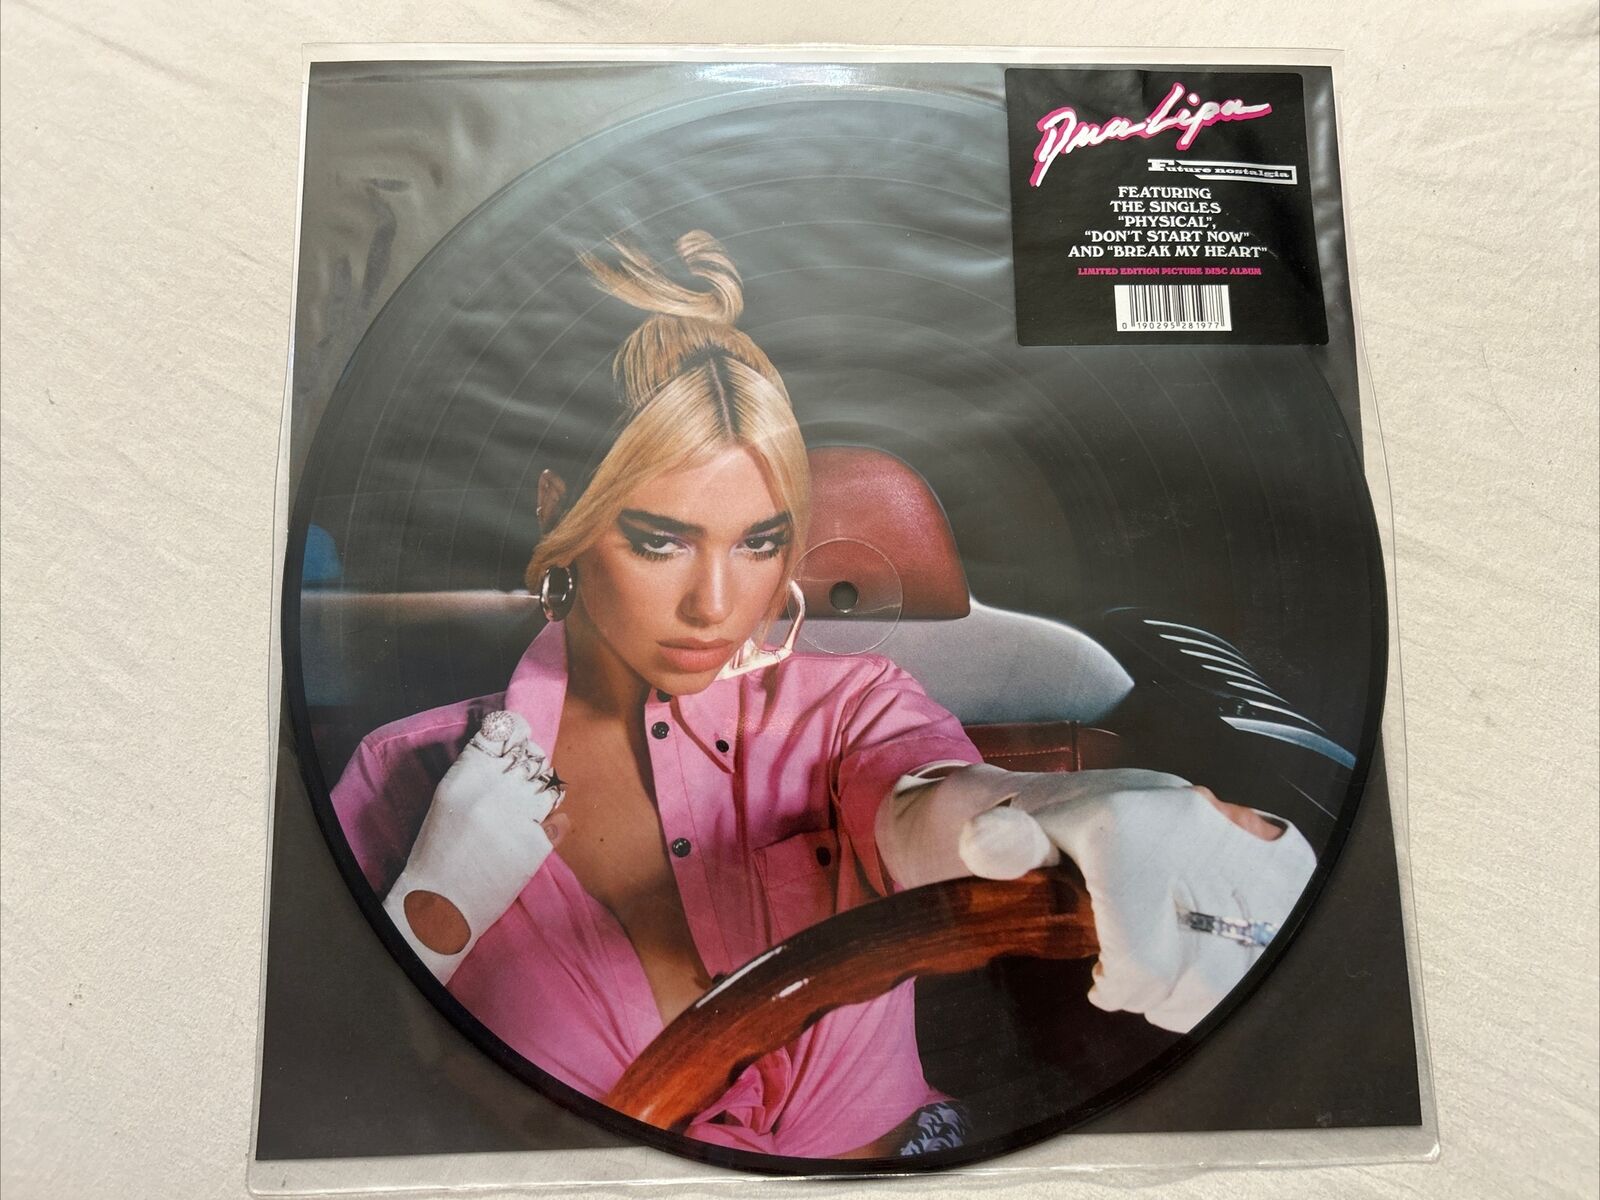 Future Nostalgia by Dua Lipa Limited Edition Picture Disc Vinyl Record Album